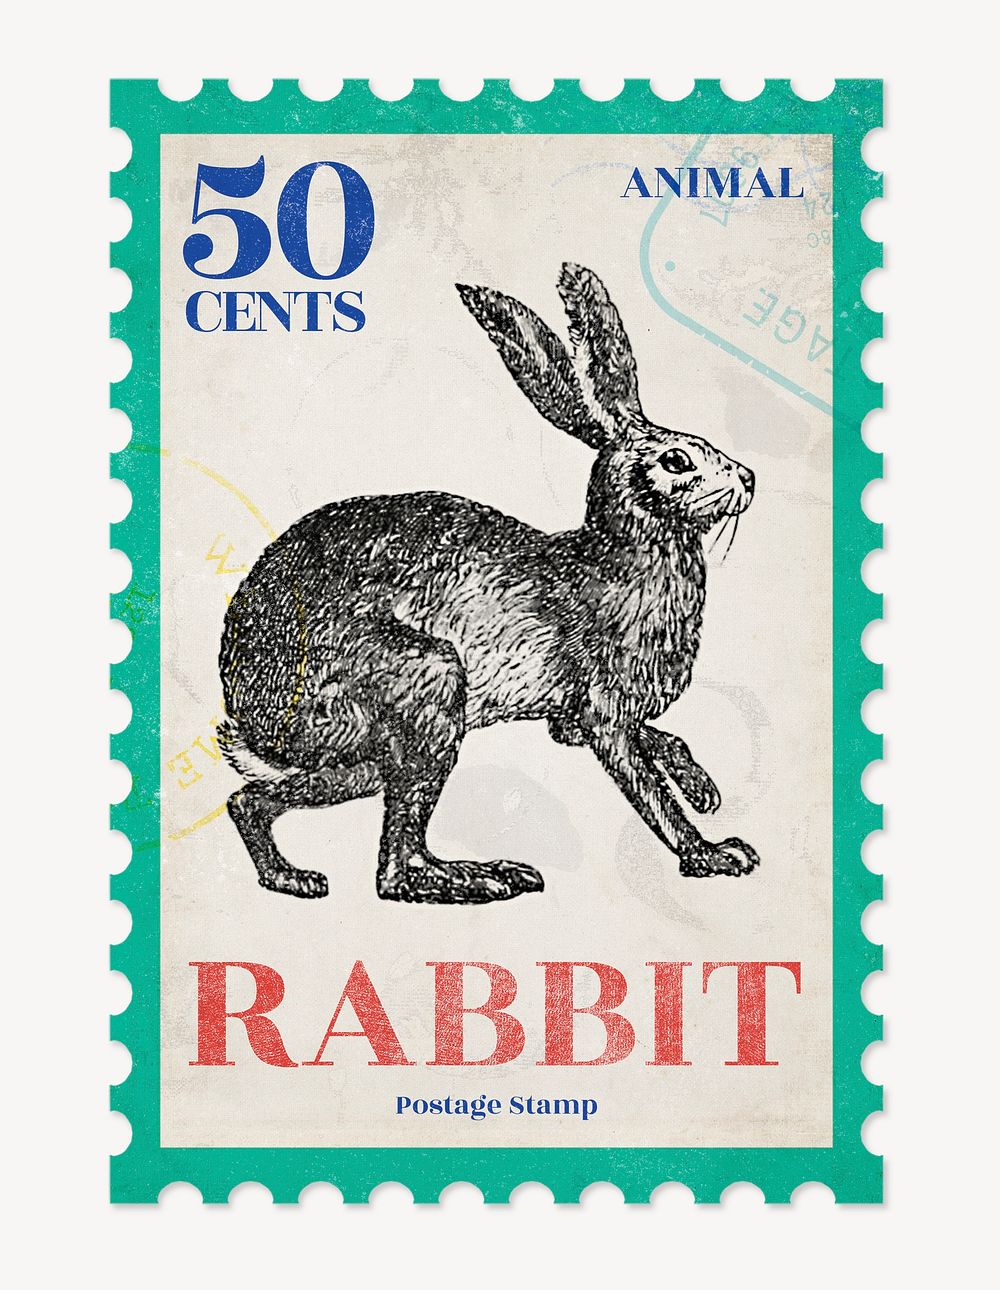 Rabbit postage stamp, animal graphic image